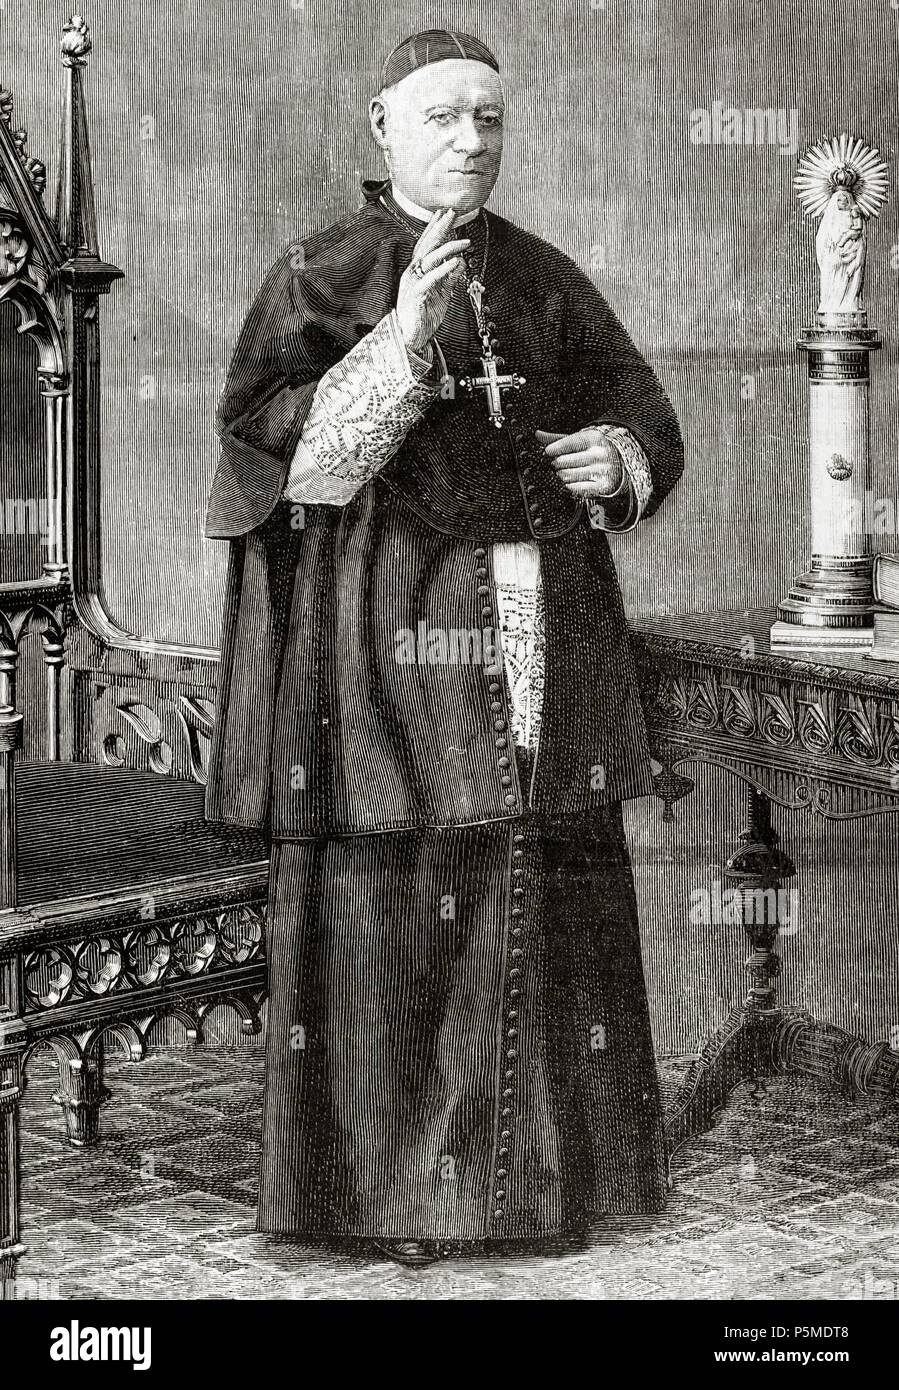 Francisco de Paula Benavides Navarrete (1810-1895). Spanish prelate. Cardinal Archbishop of Zaragoza. Engraving of The Spanish and American Illustration, 1892. Stock Photo